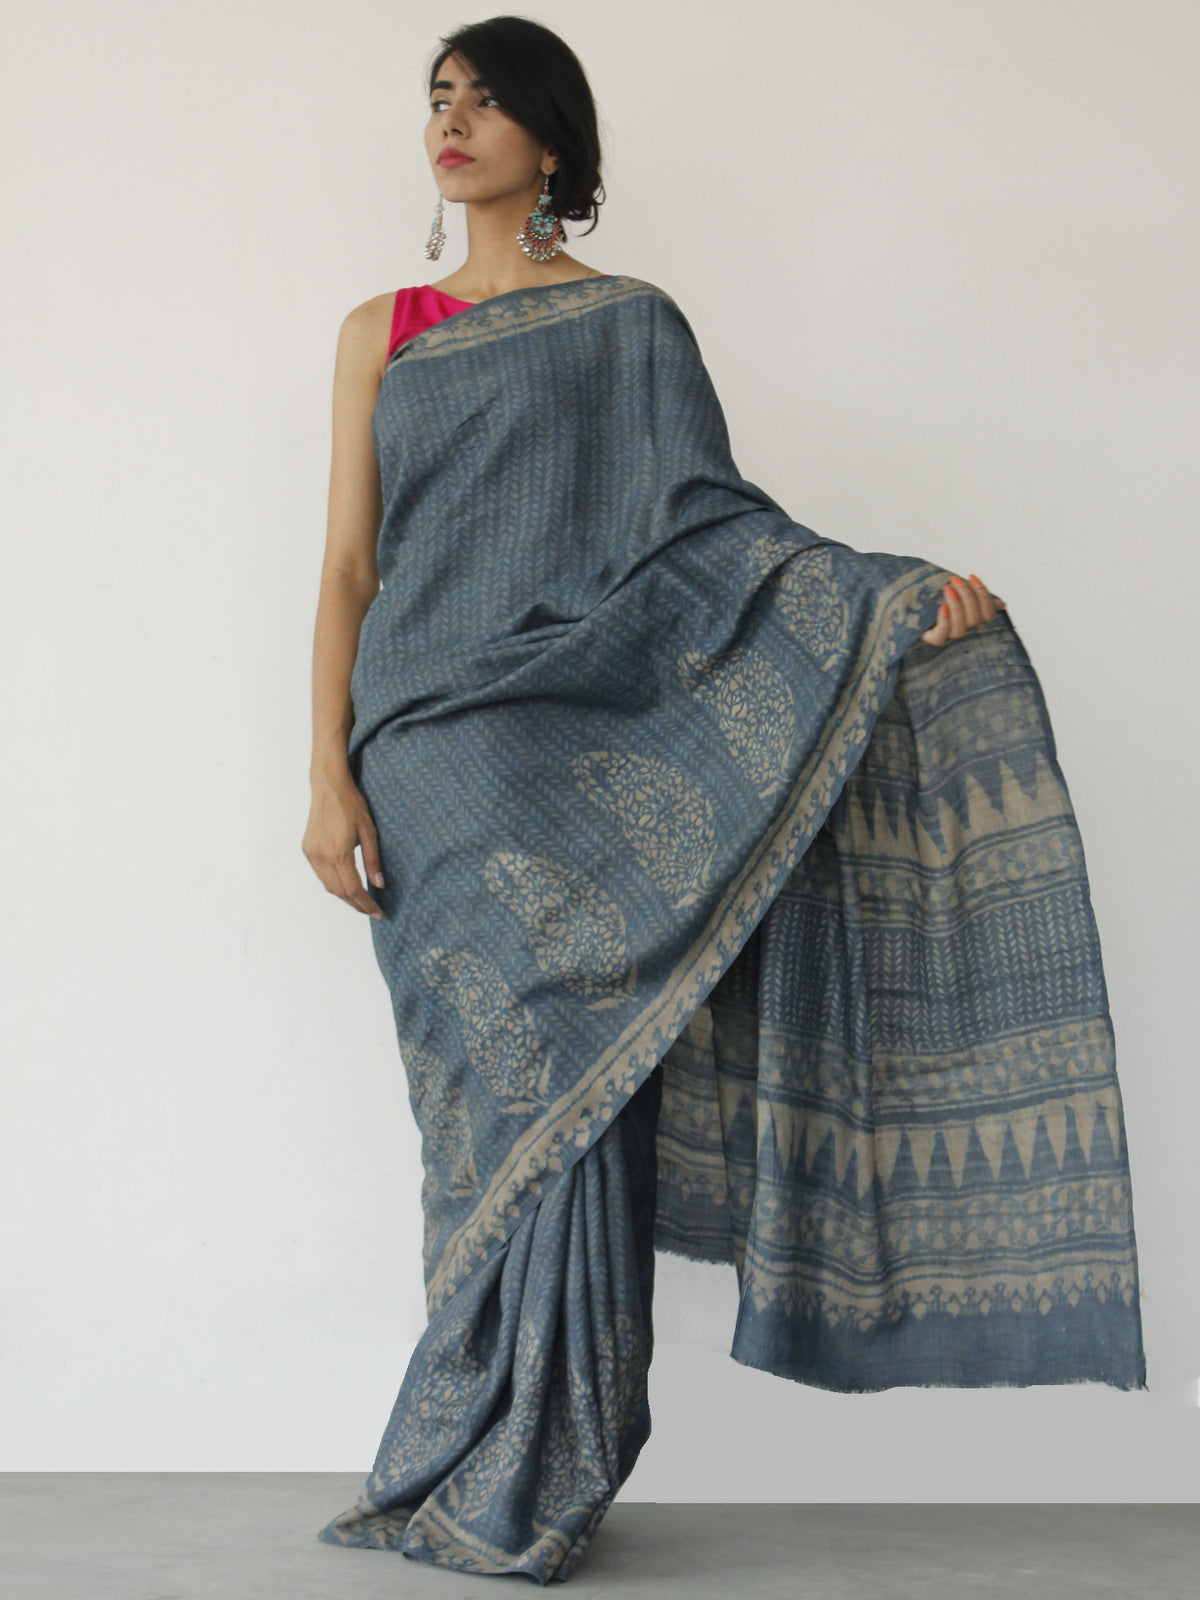 Tussar Handloom Silk Hand Block Printed Saree in Metallic Blue Beige - S031702544